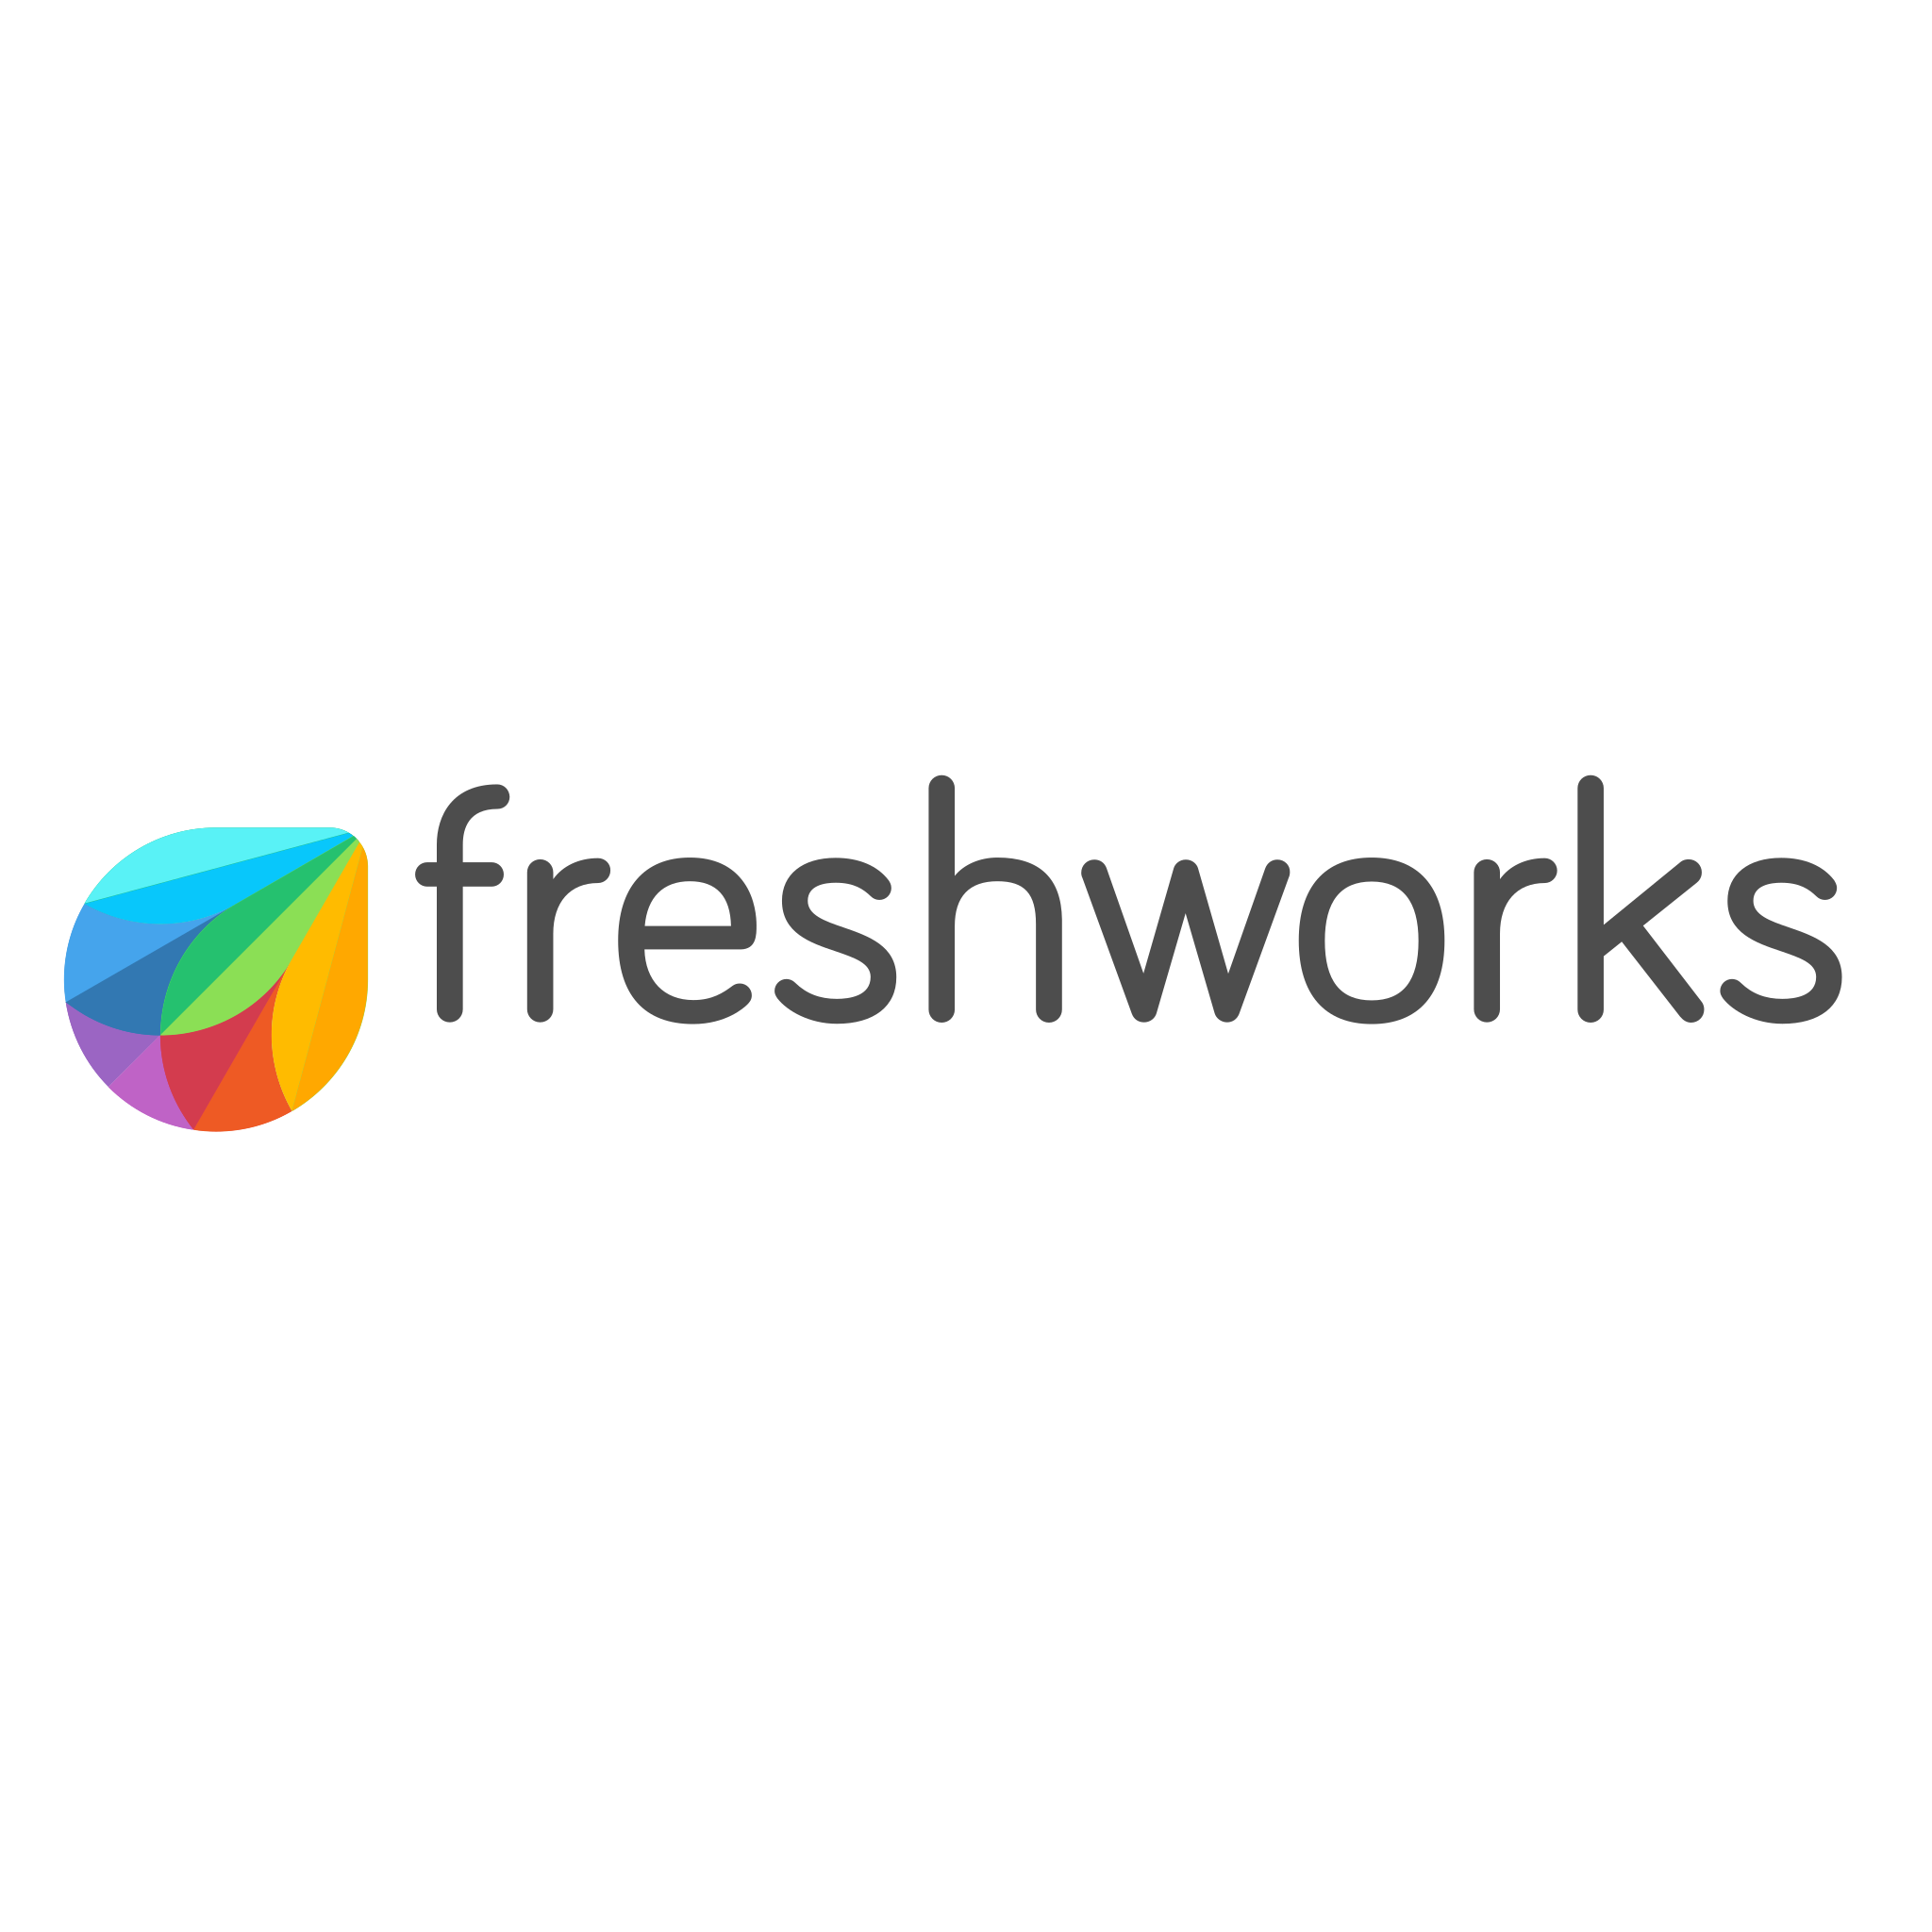 freshworks-vector-logo